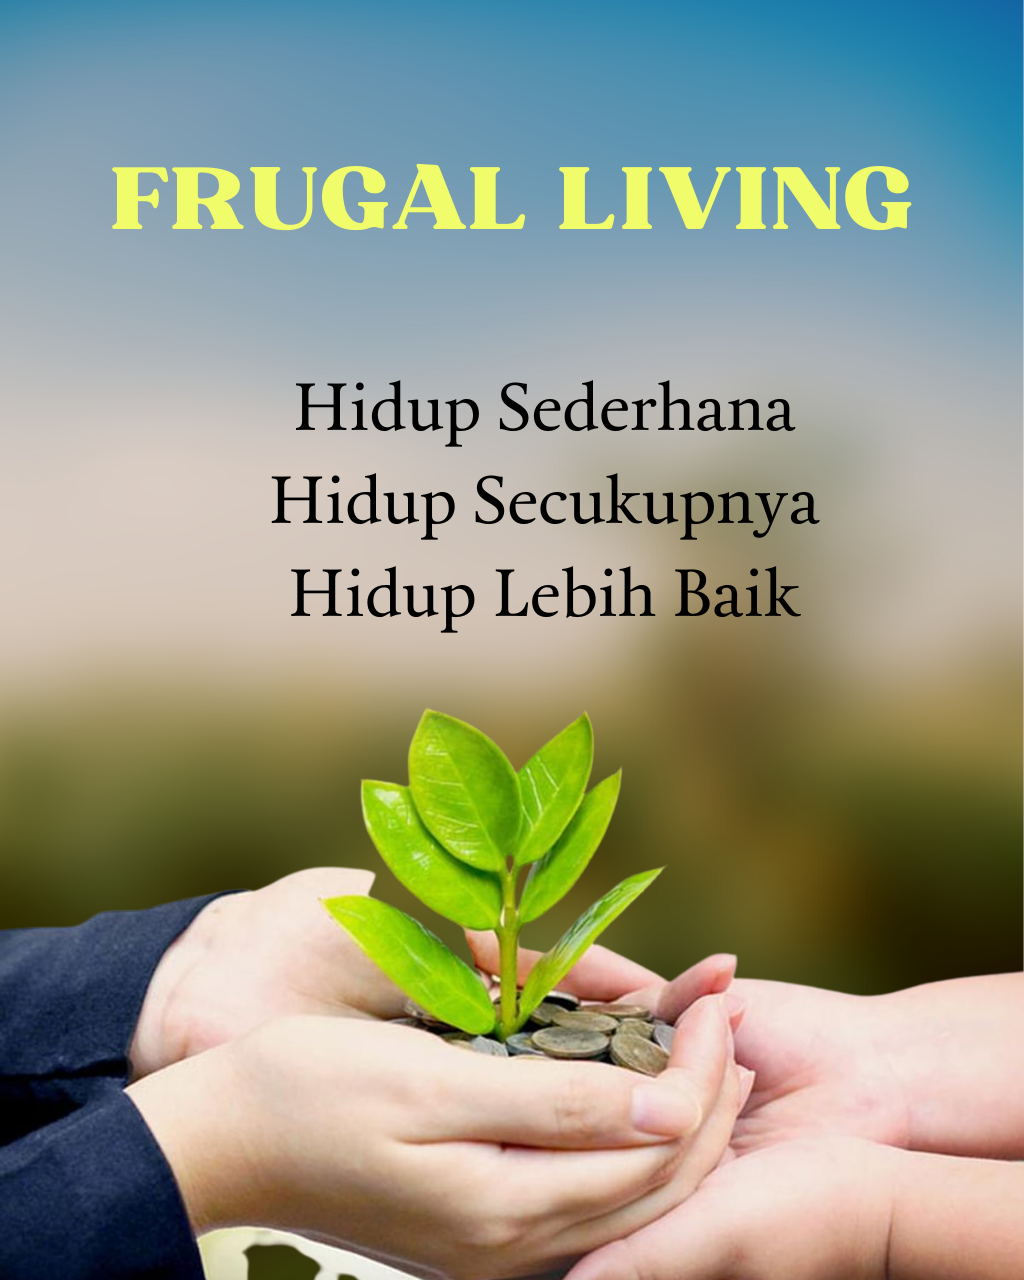 Frugal Living atau Brutal Living?